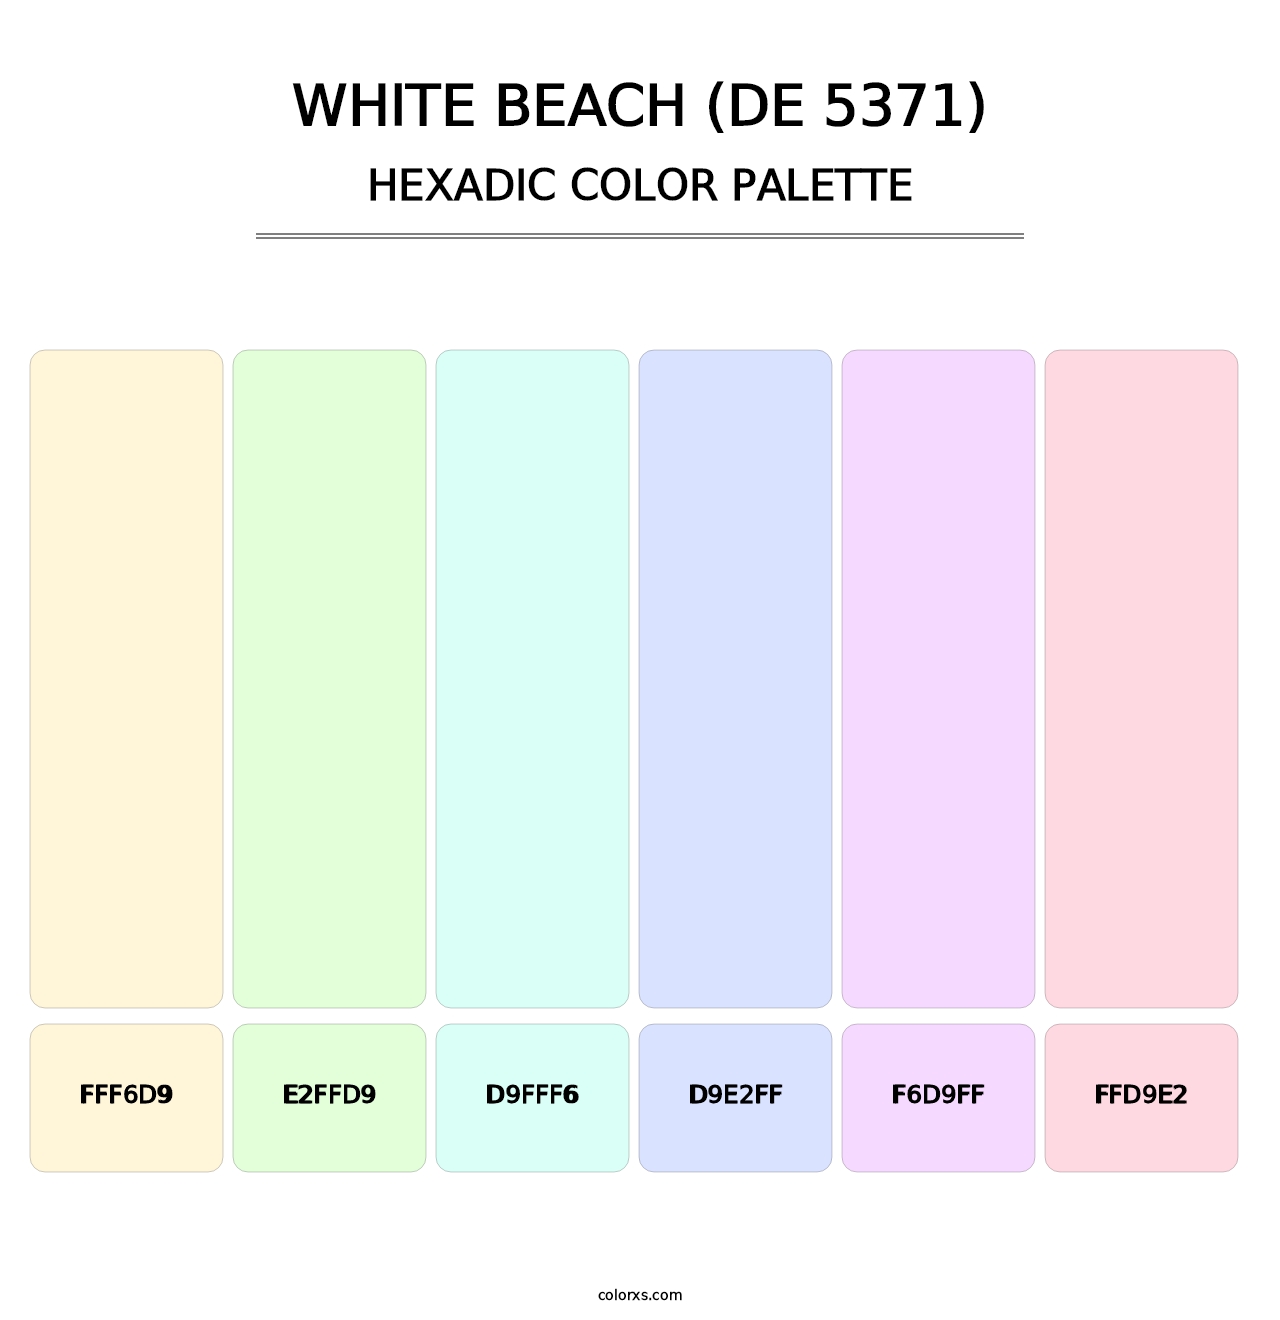 White Beach (DE 5371) - Hexadic Color Palette